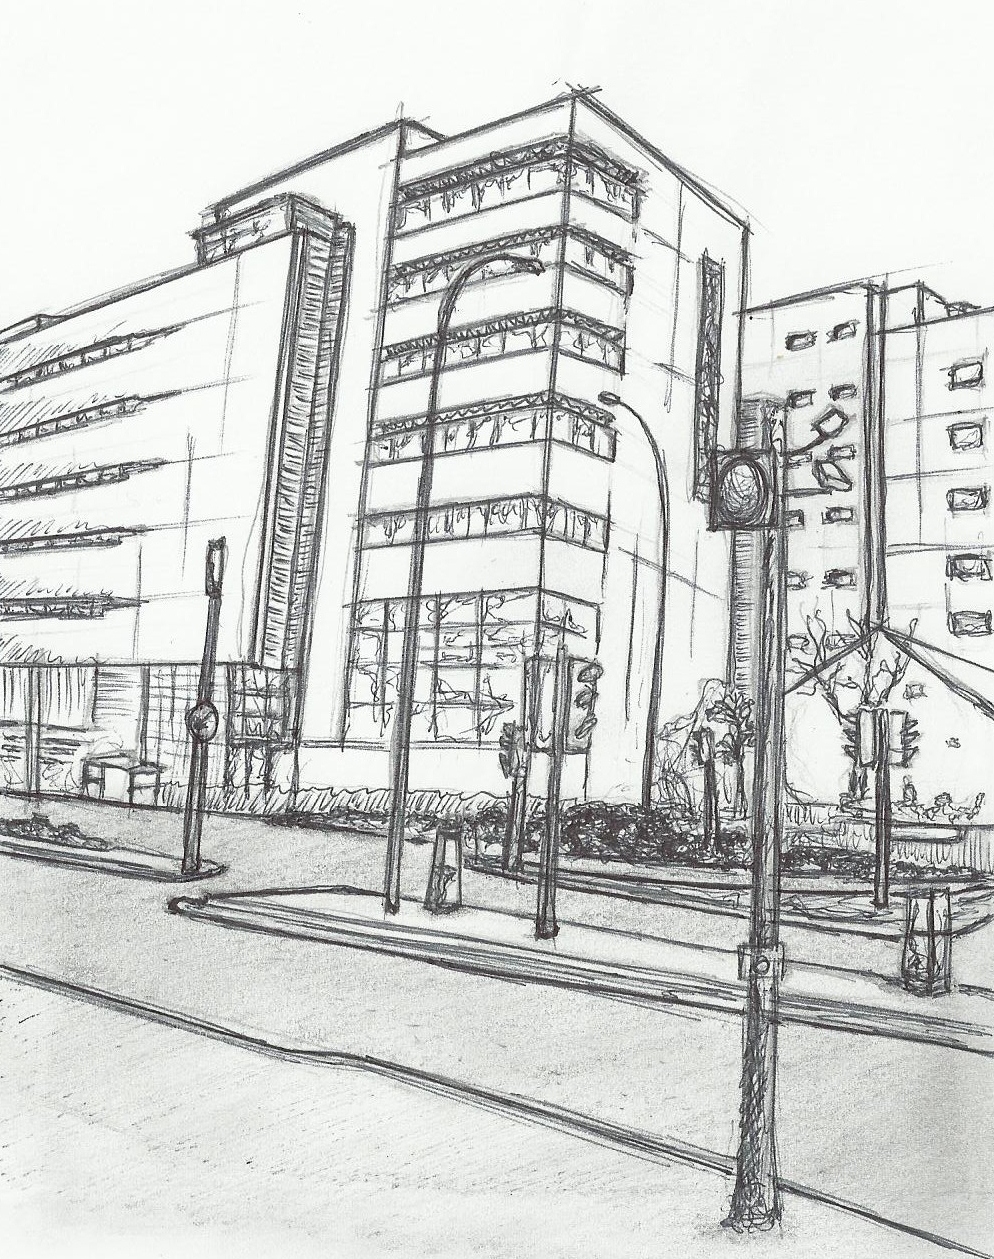 Manchester School of Architecture Portfolio: Sketches